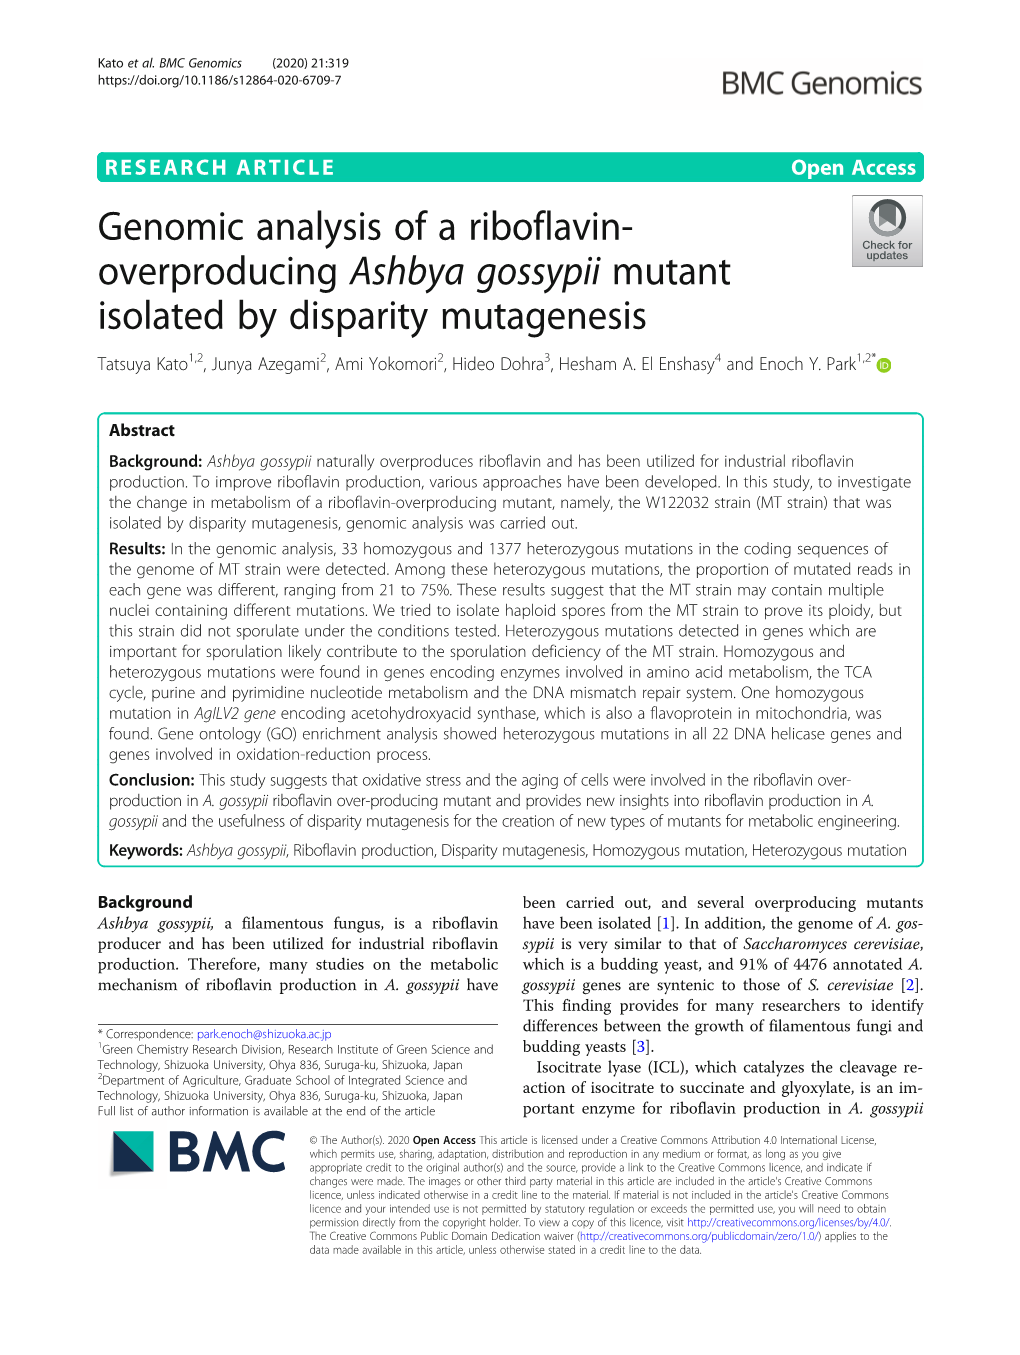 Genomic Analysis of a Riboflavin-Overproducing Ashbya